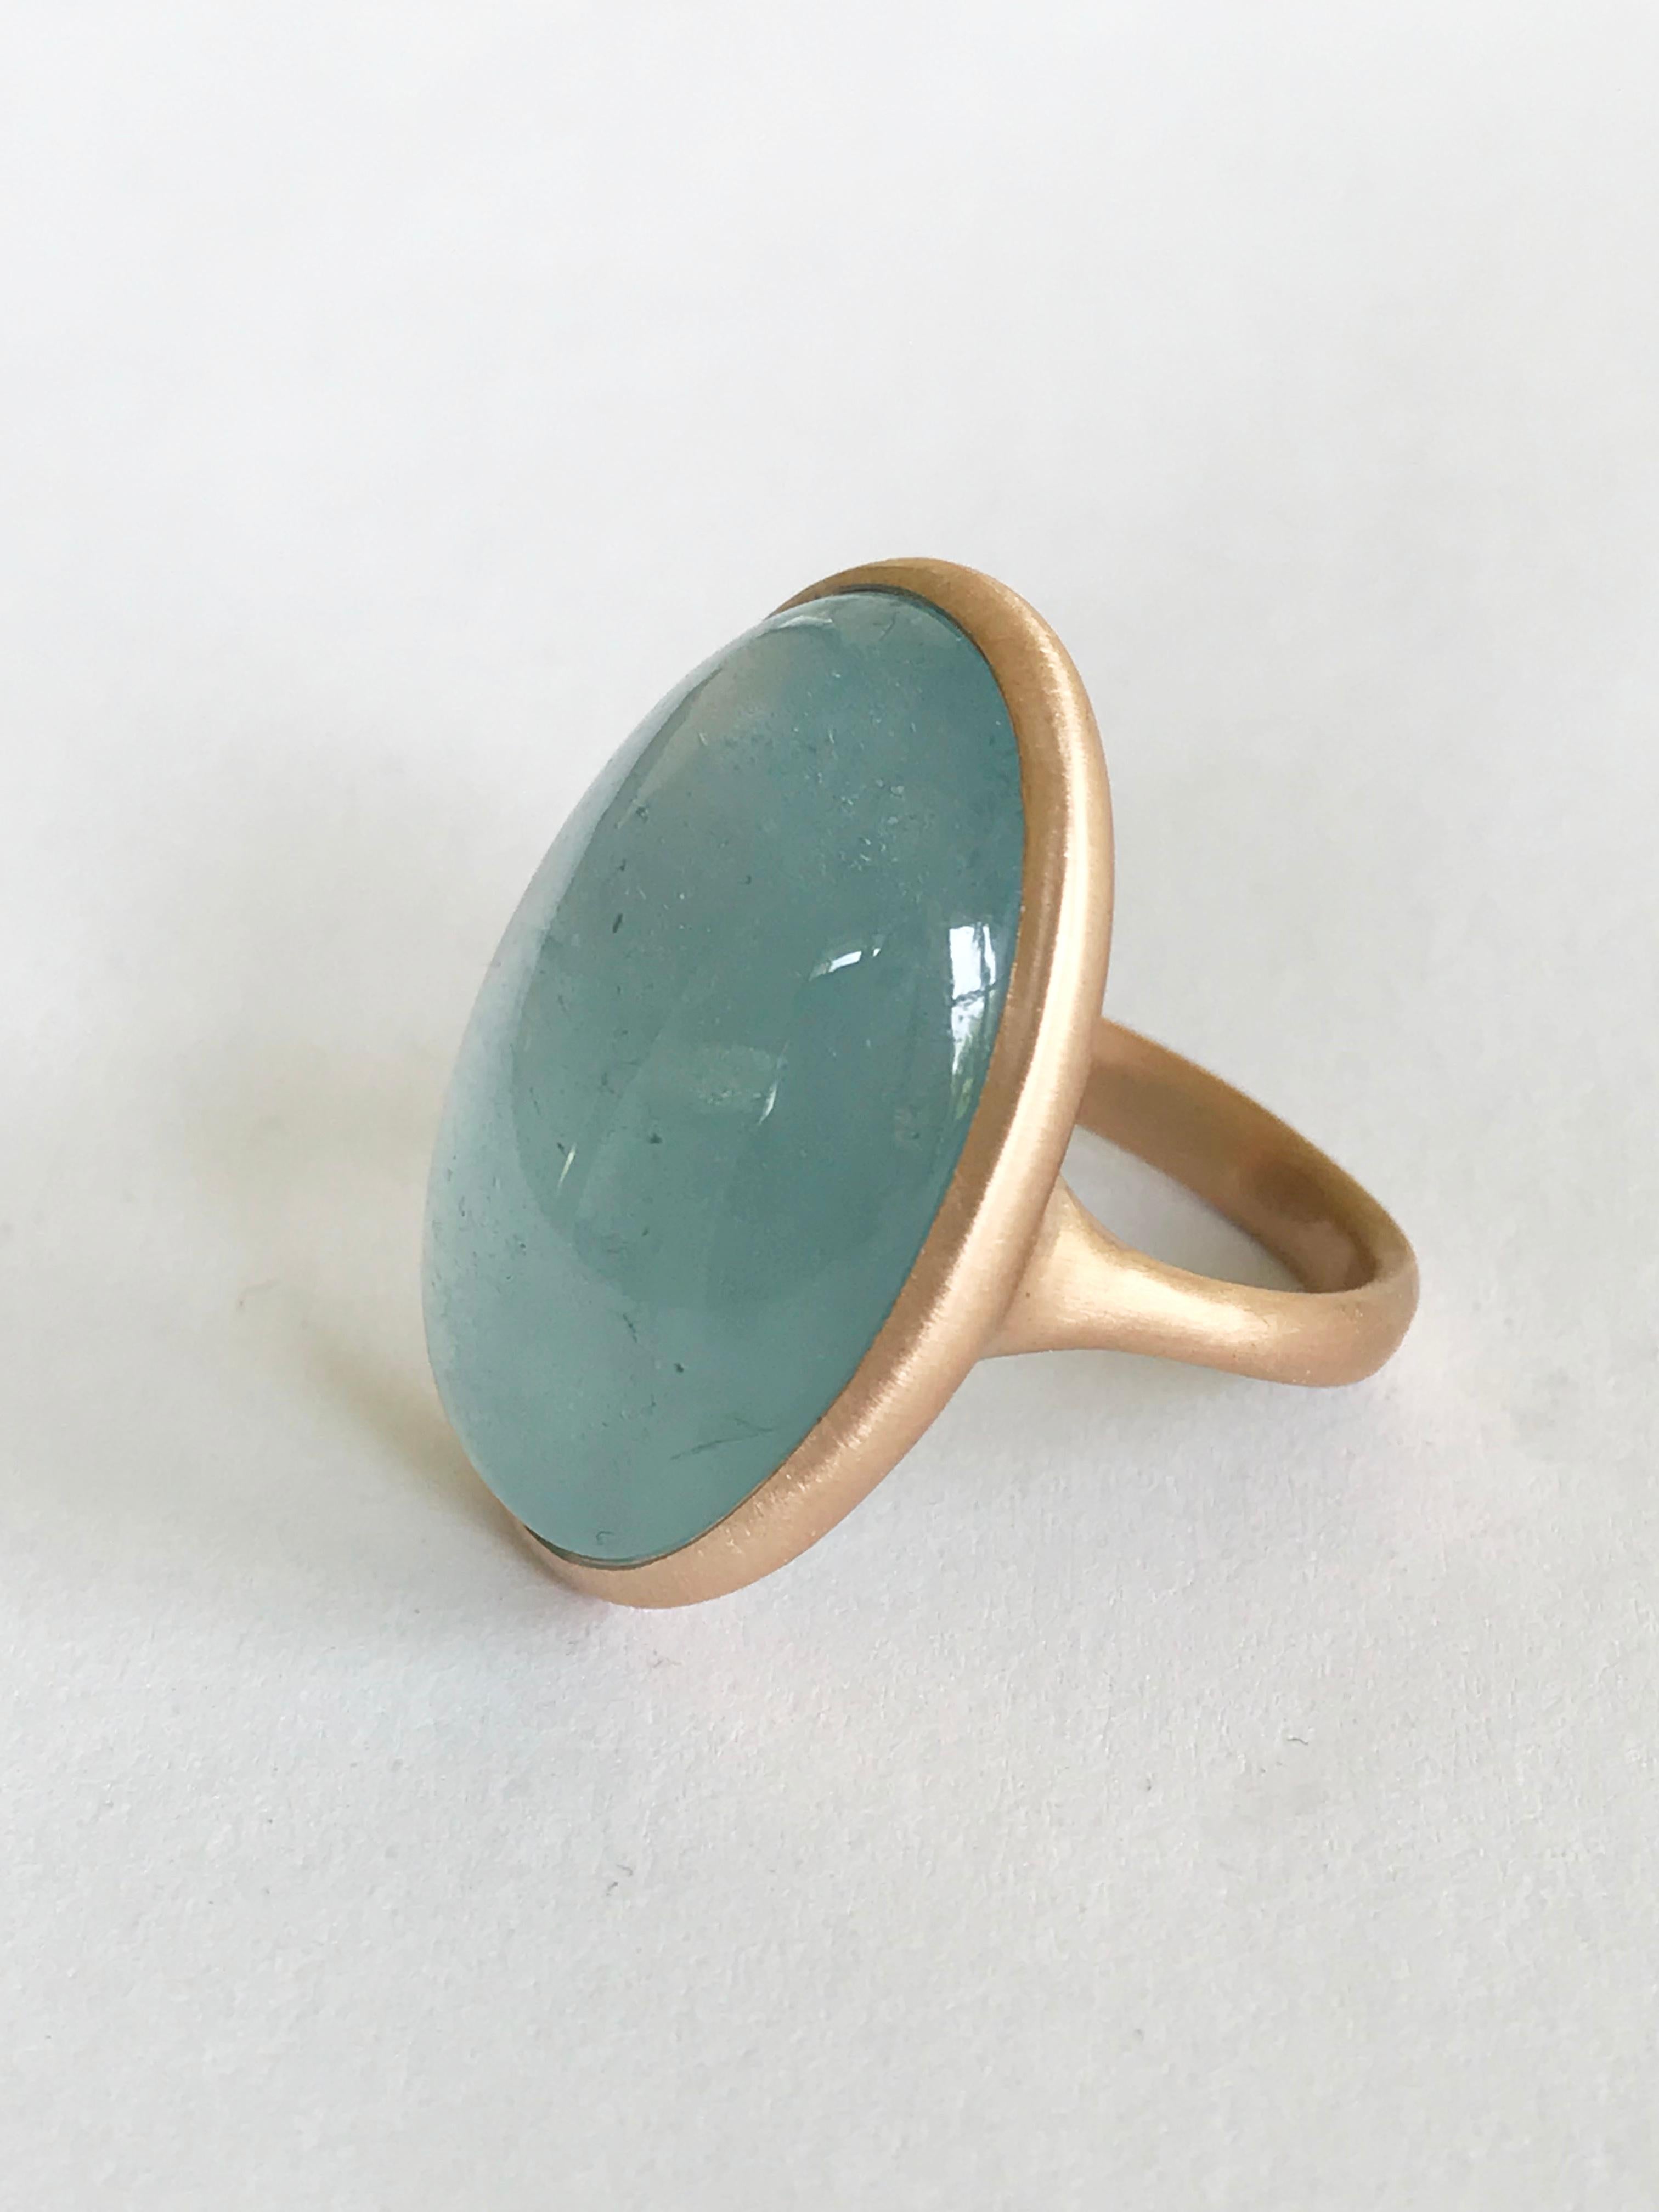 Dalben Design Aquamarine Oval Cabochon Rose Gold Ring In New Condition For Sale In Como, IT